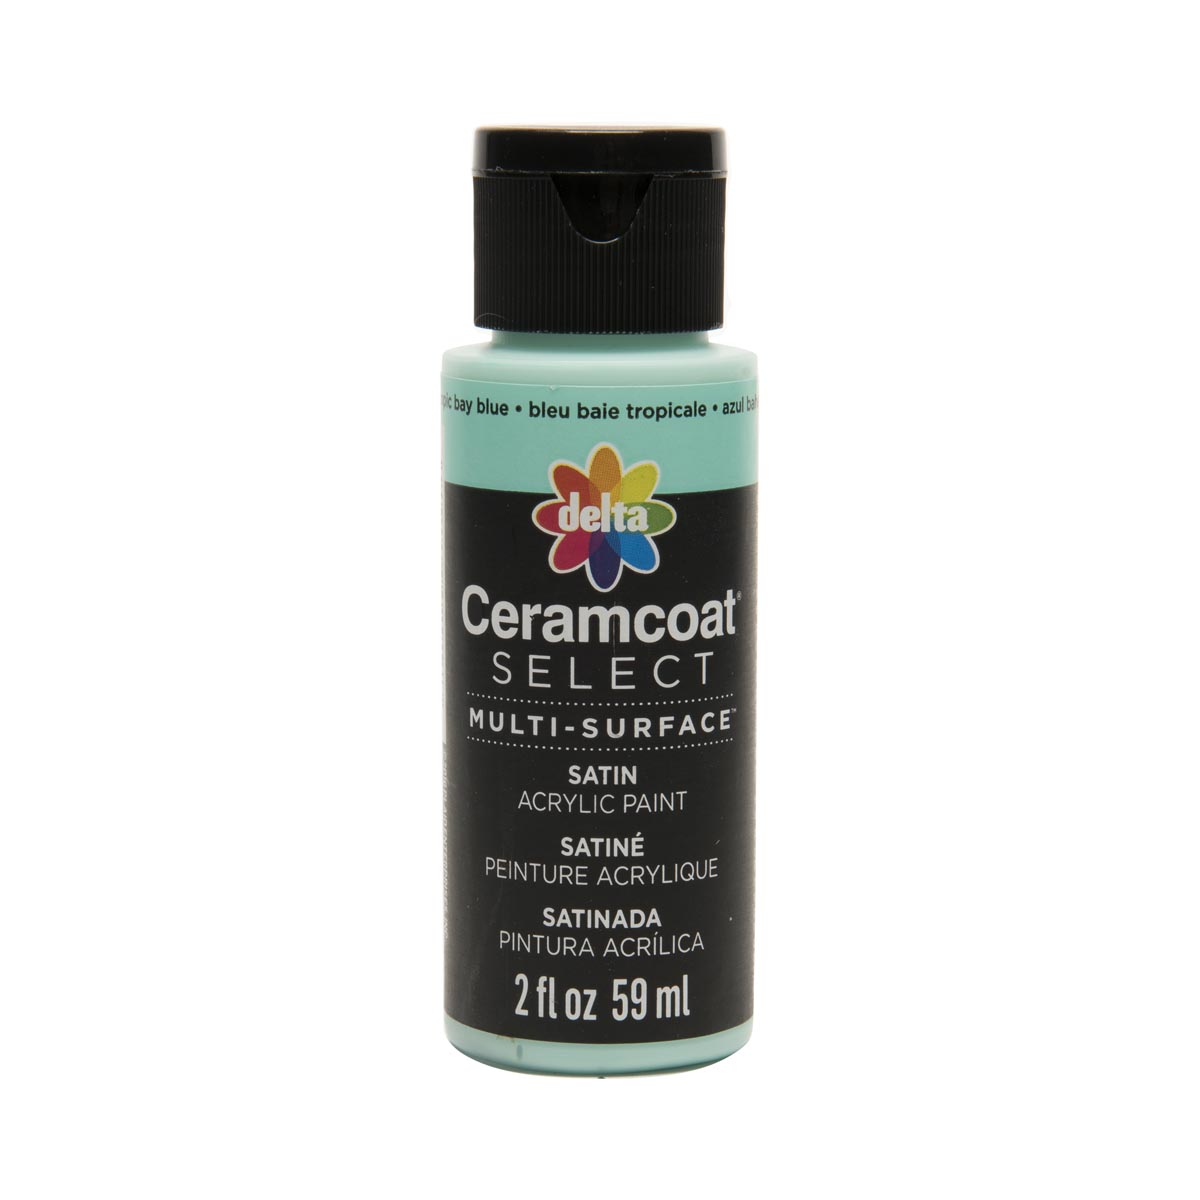 Delta Ceramcoat ® Select Multi-Surface Acrylic Paint - Satin - Tropic Bay Blue, 2 oz. - 02917